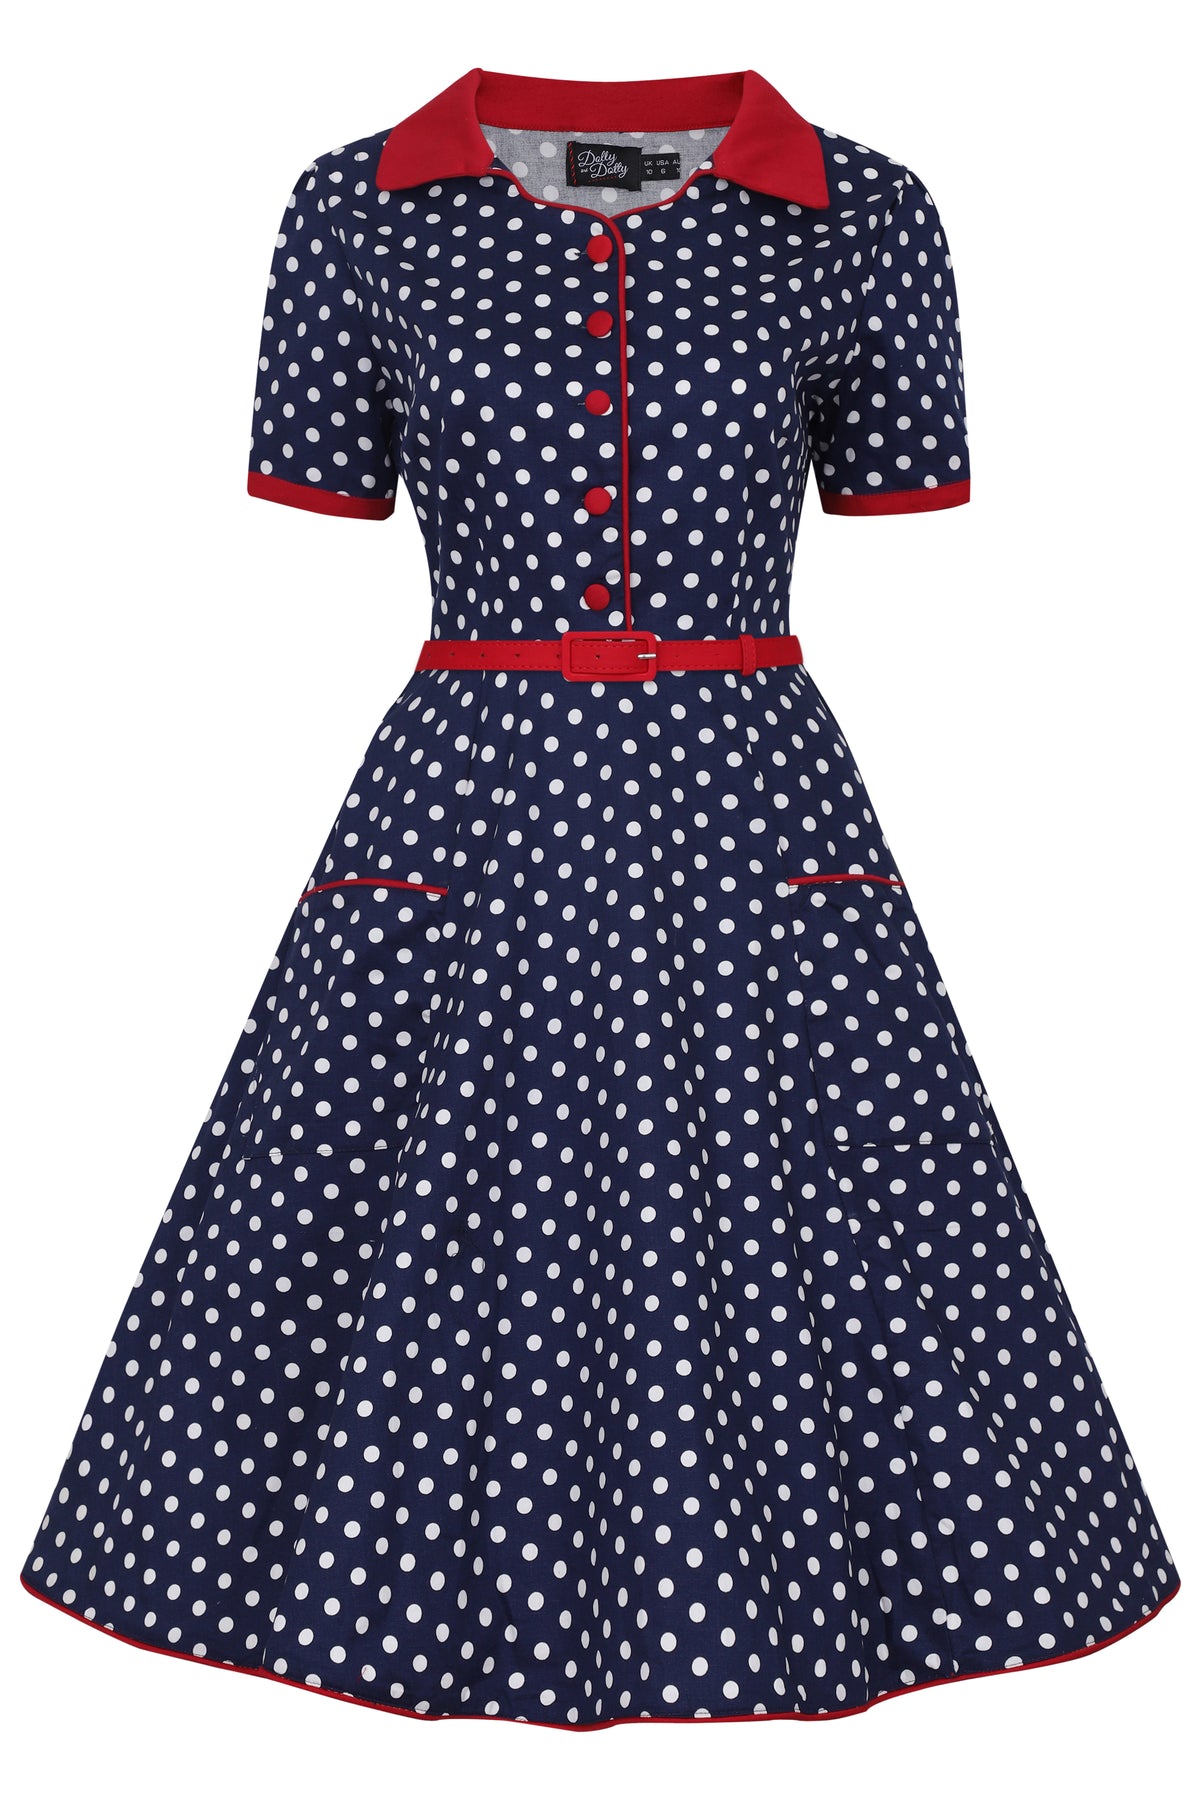 Penelope Navy Blue Polka Dot Rockabilly Shirt Dress